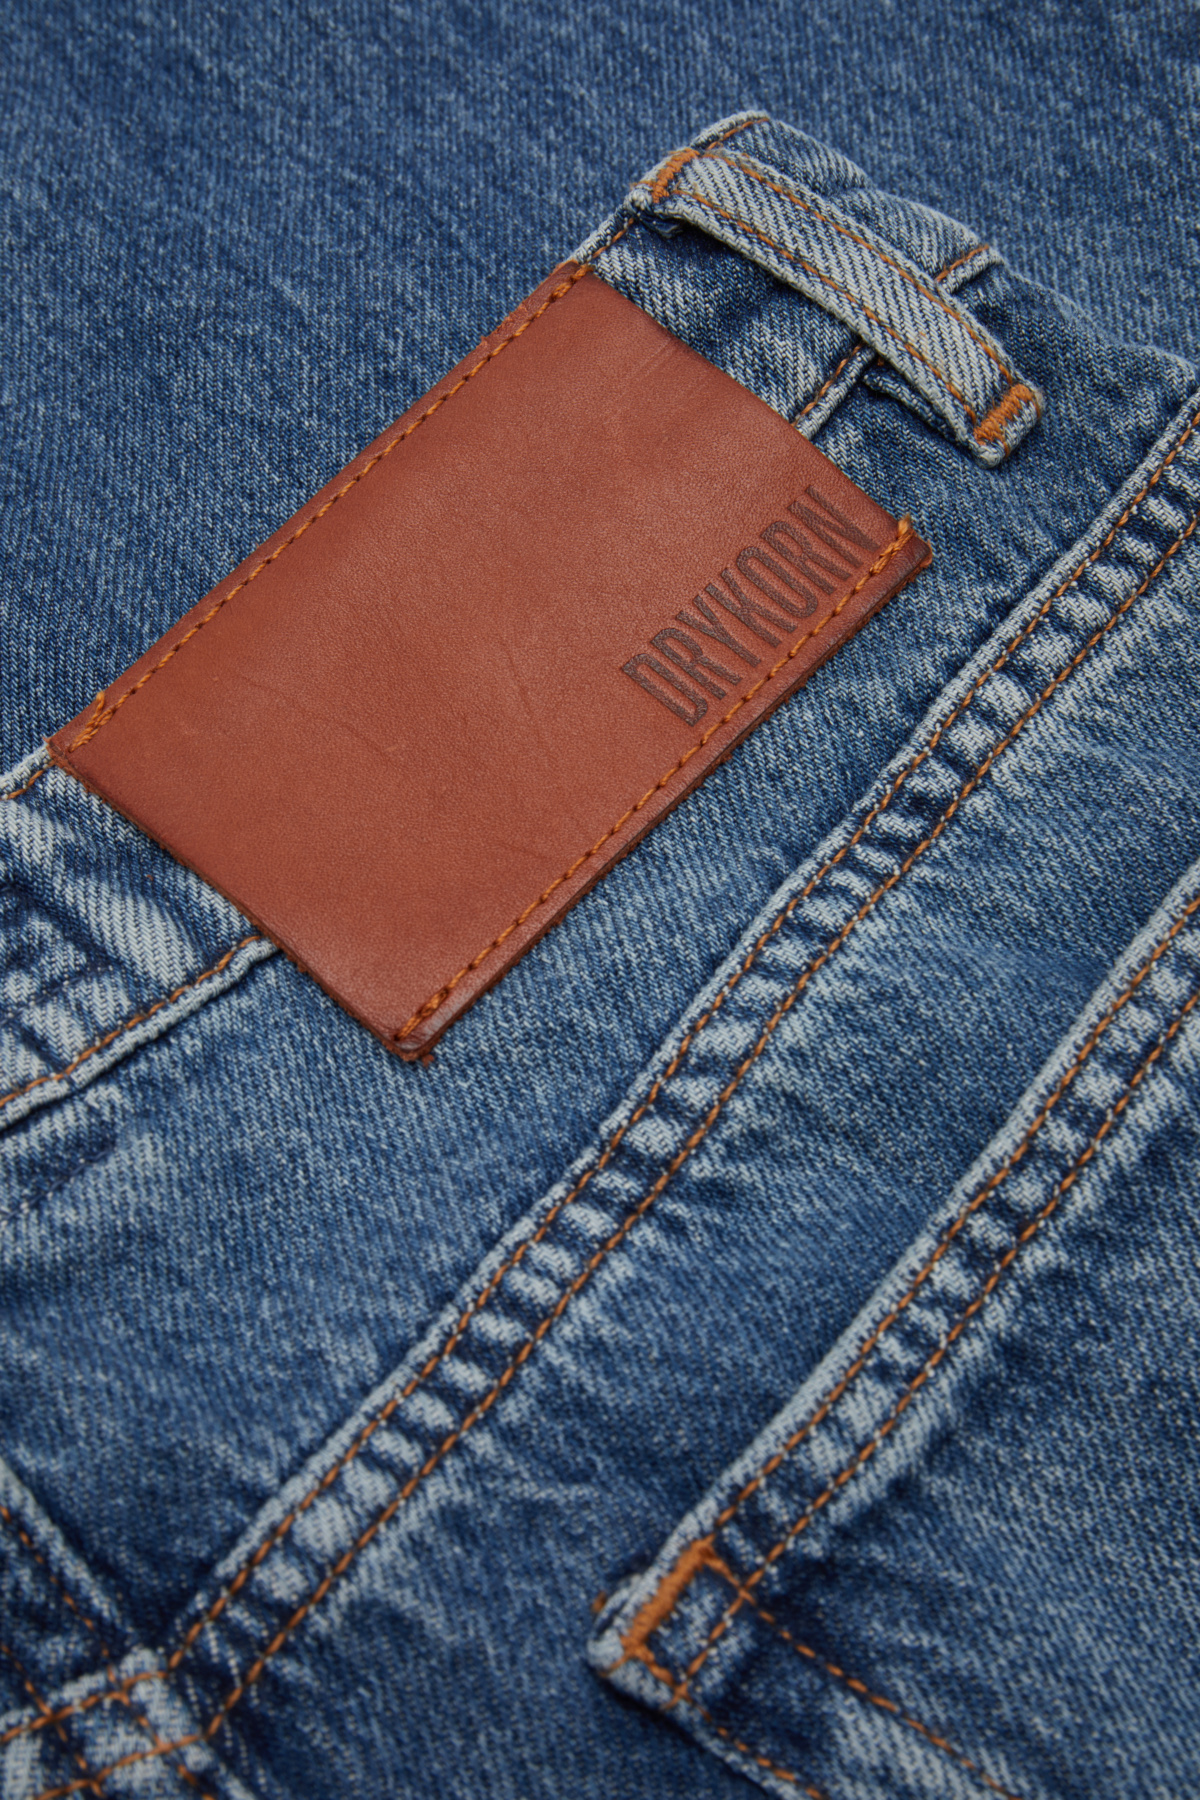 DRYKORN High-Waist-Jeans mit Waschung 440867